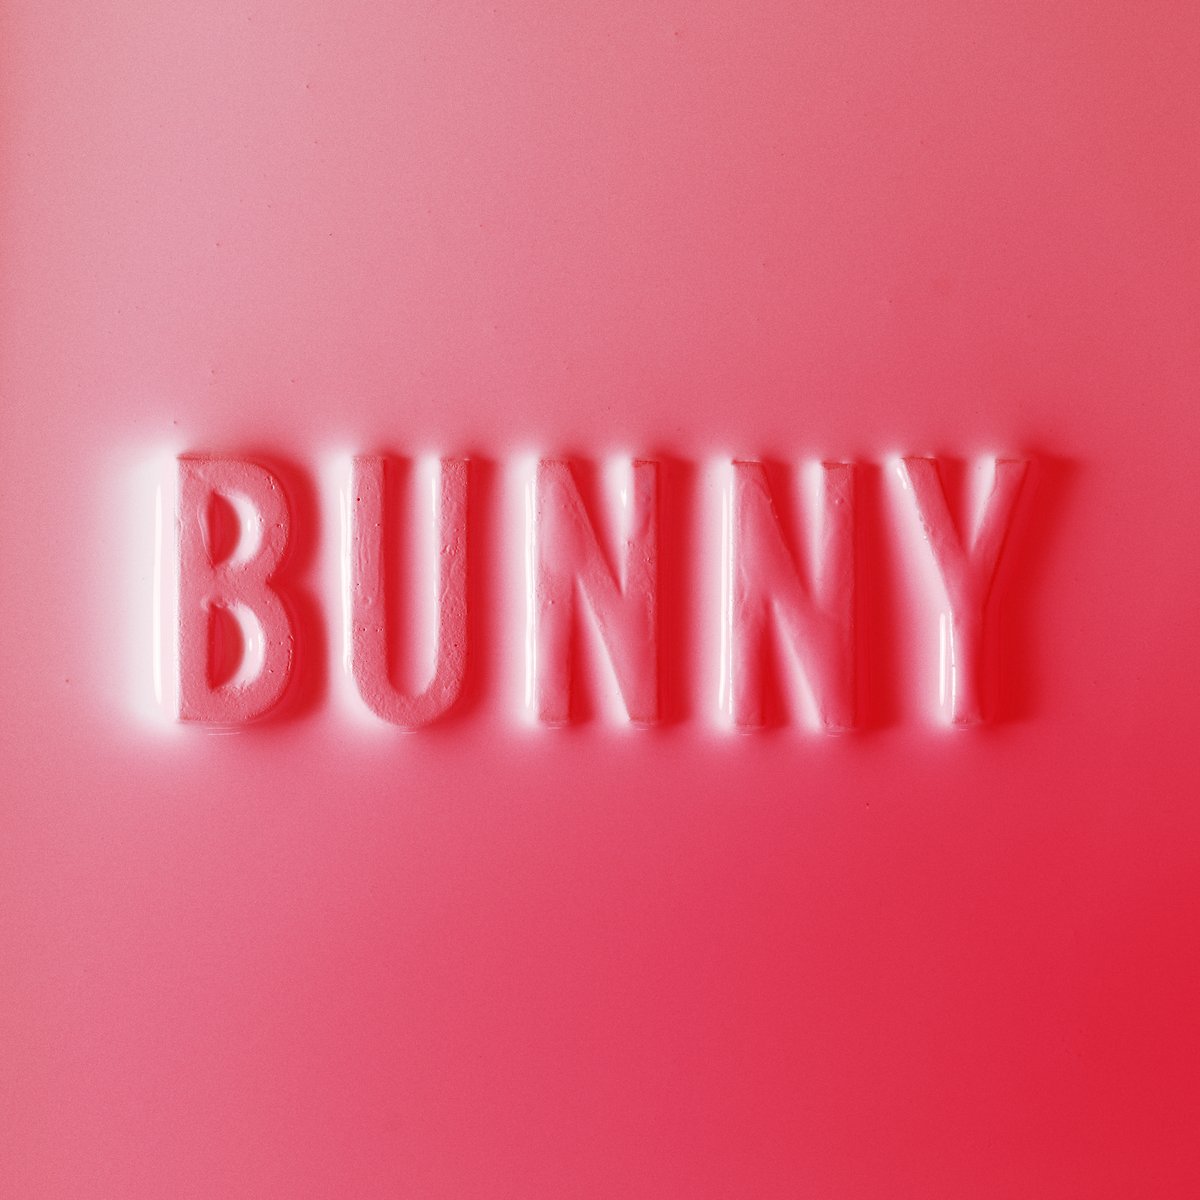 Matthew Dear Bunny cover